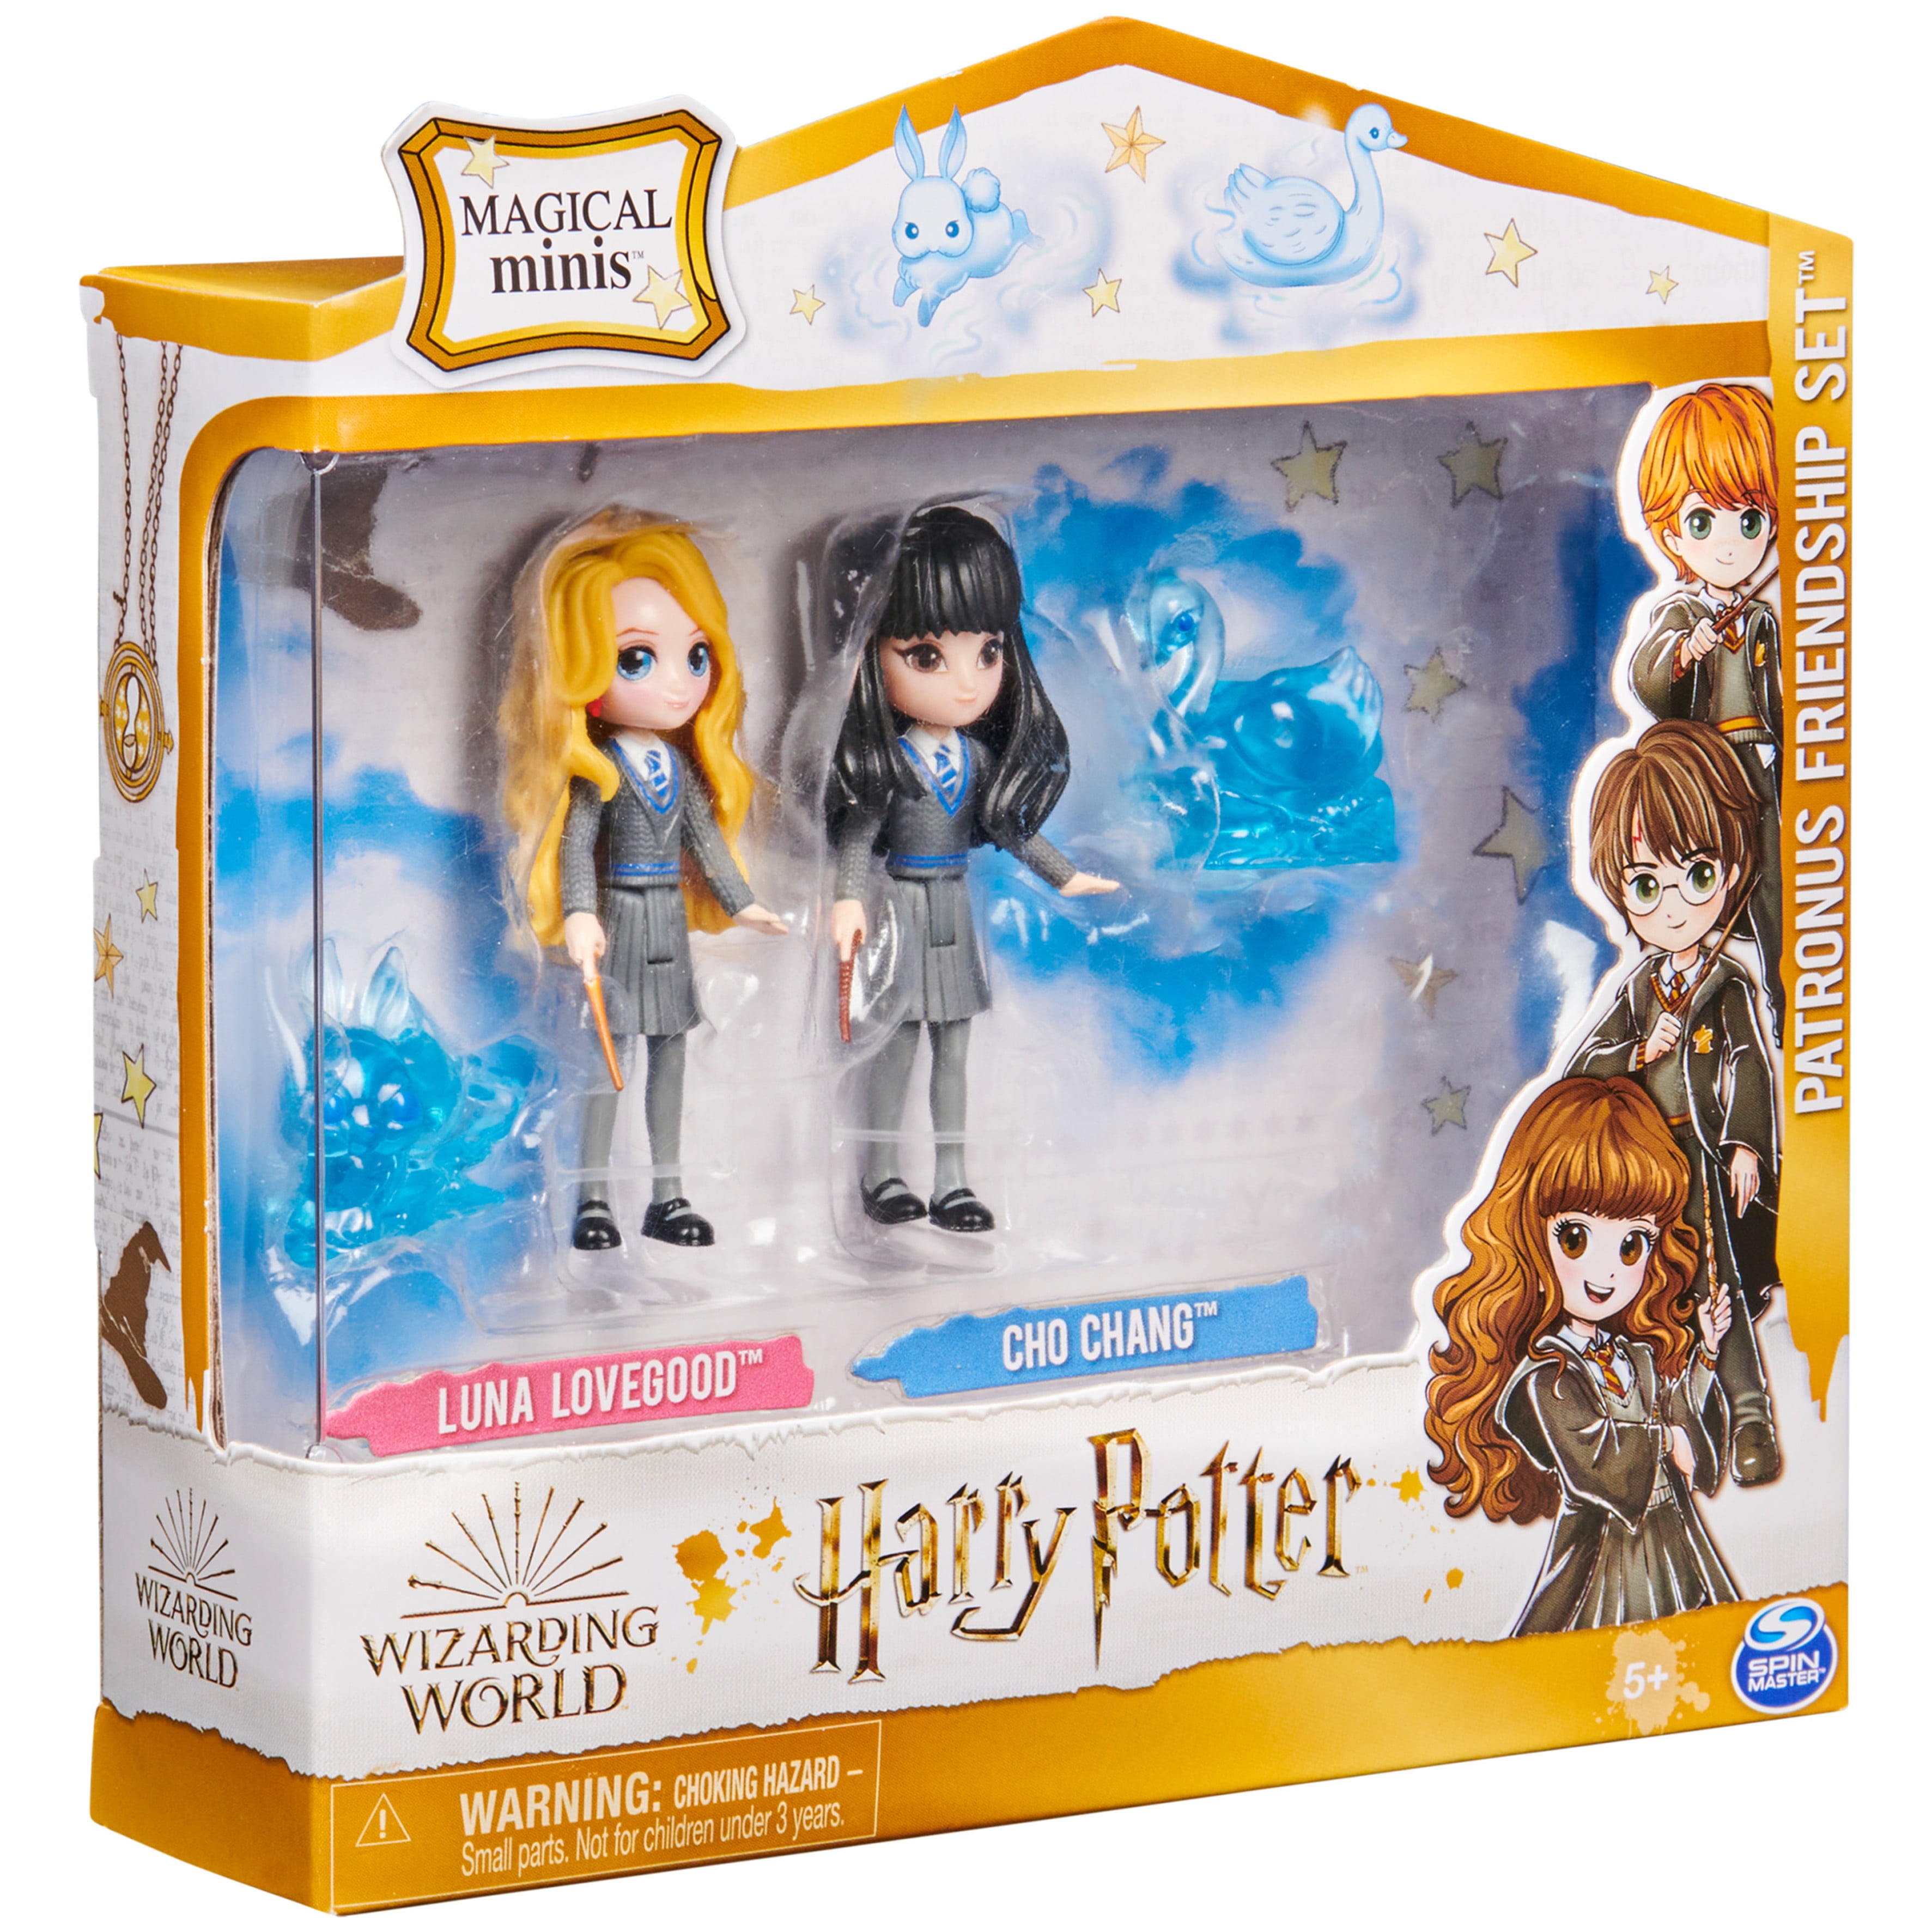 Wizarding World Magical Minis Hermione Granger & Hagrid Friendship Set 